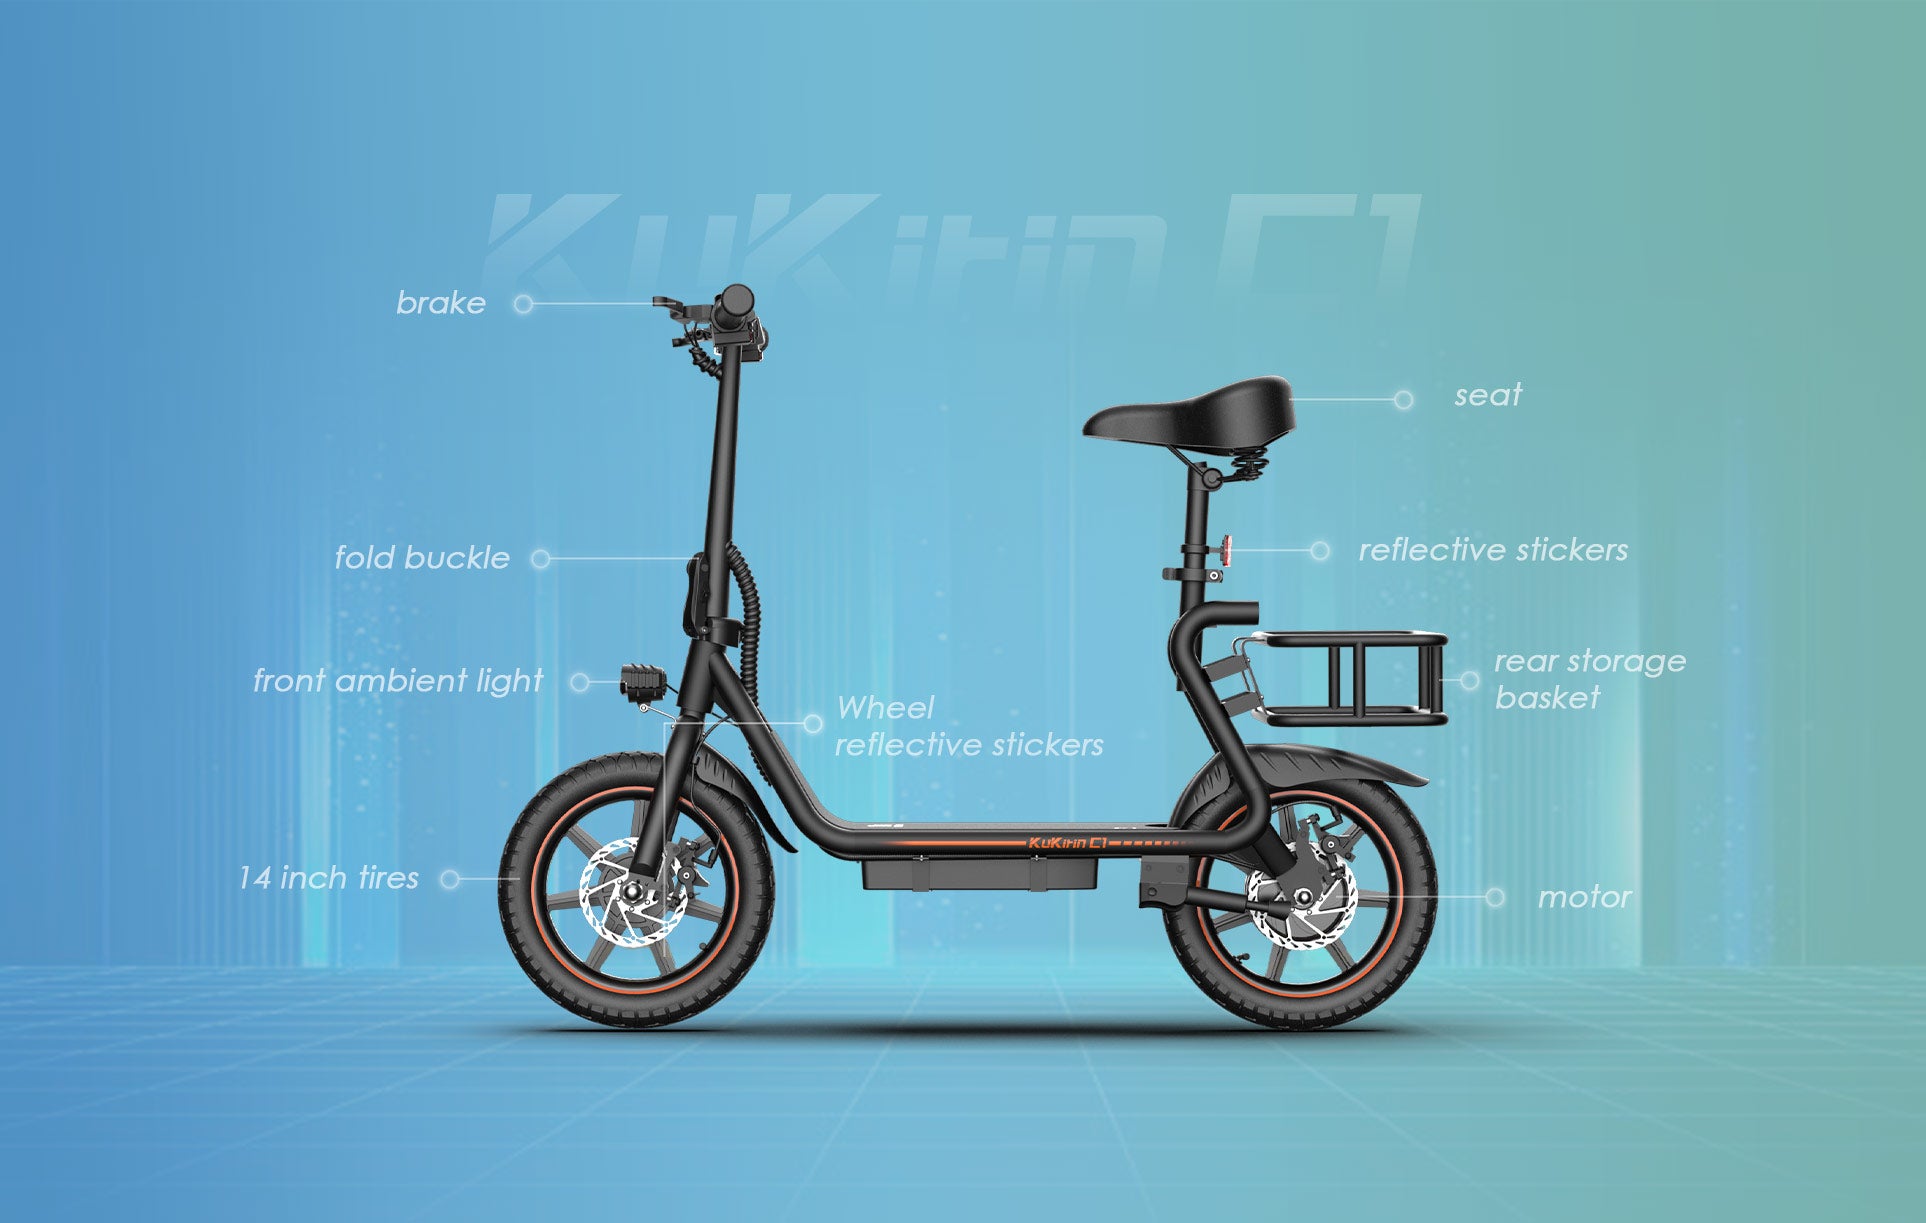 KuKirin C1 electric scooter